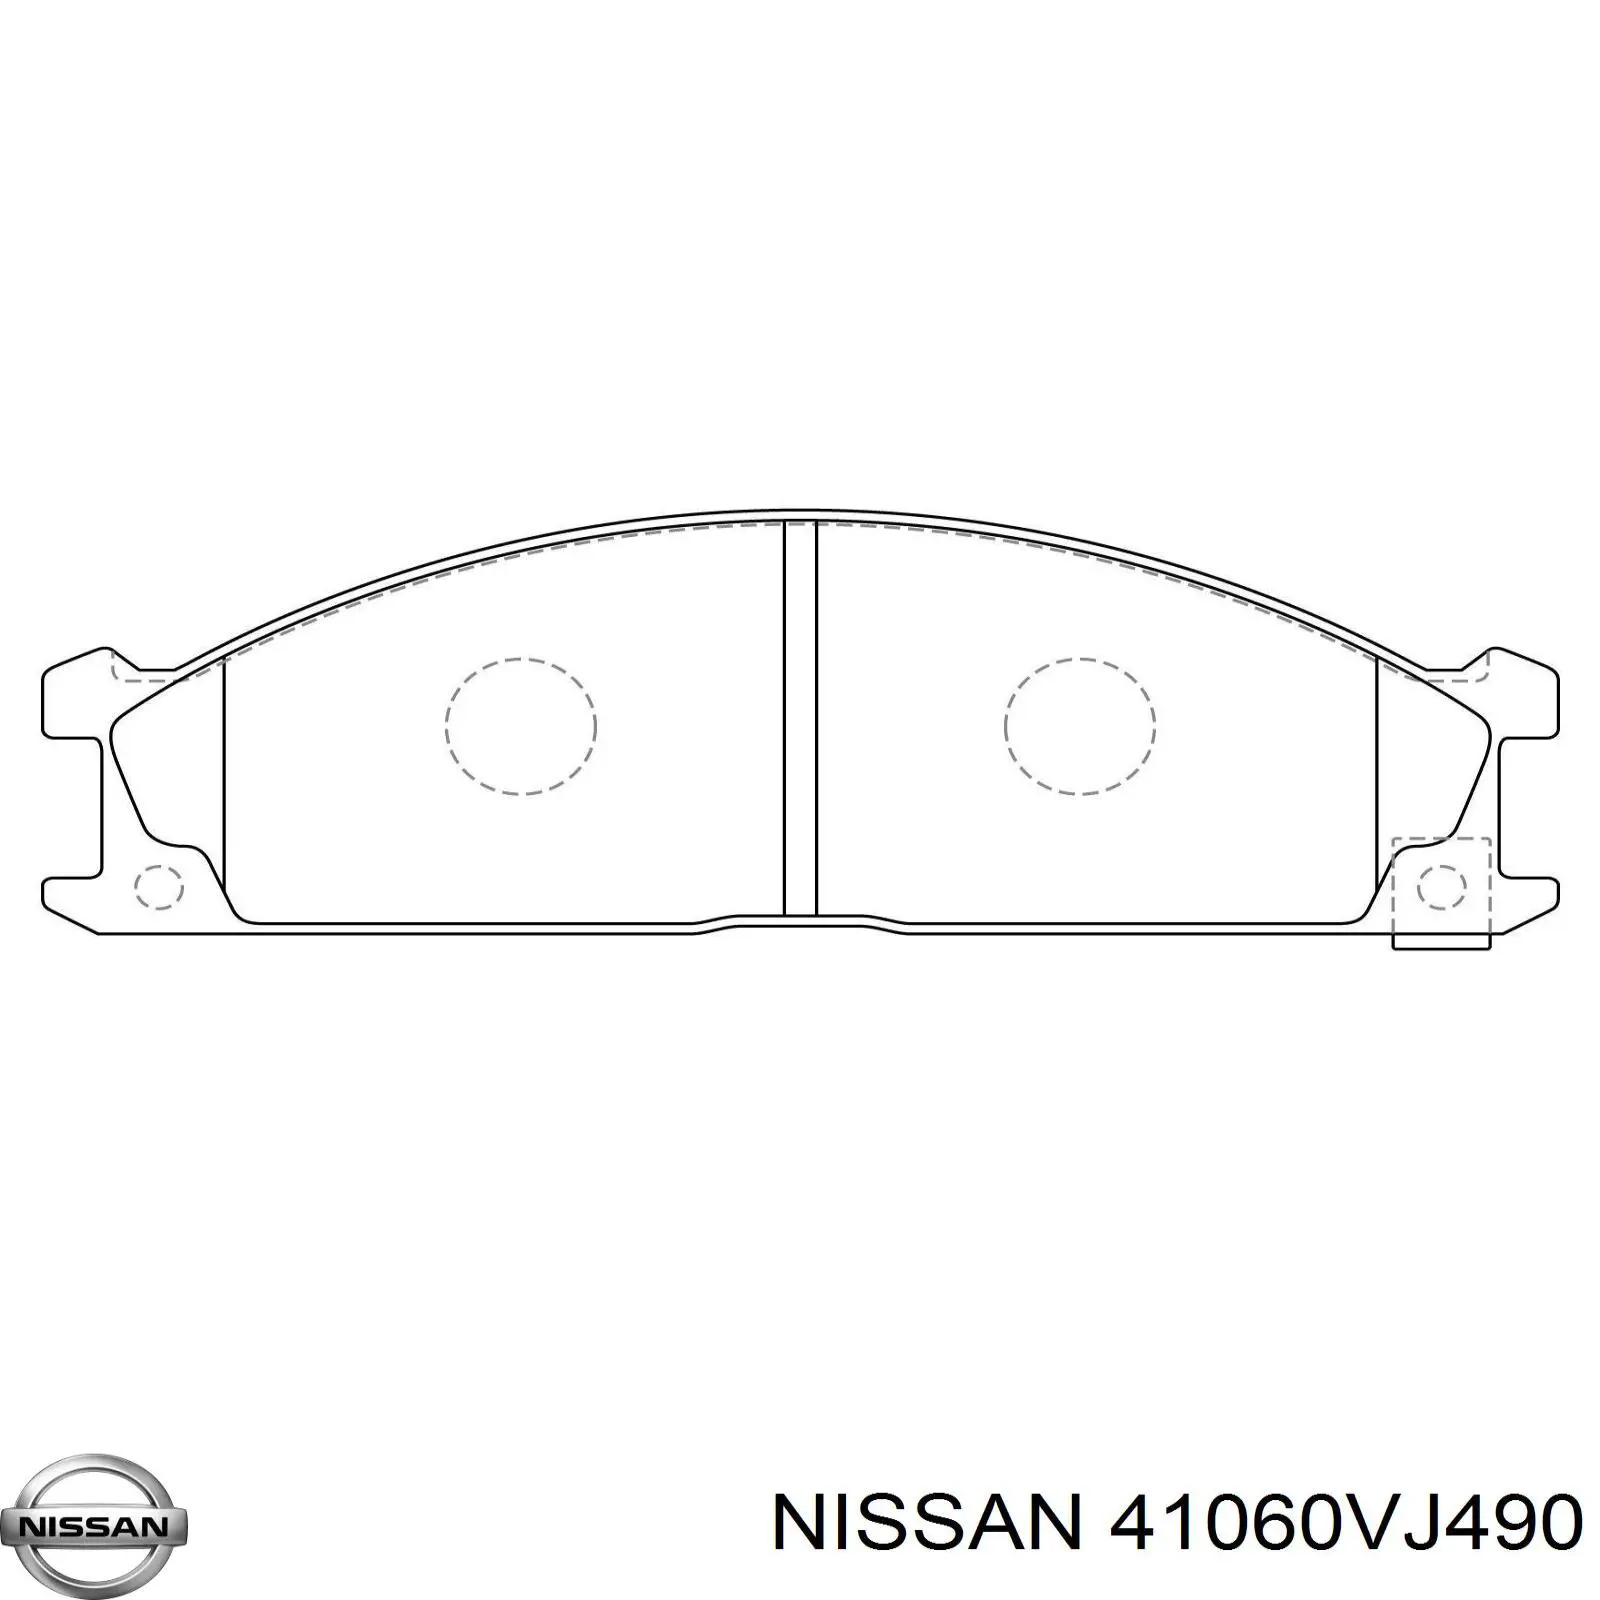 41060VJ490 Nissan pastillas de freno delanteras